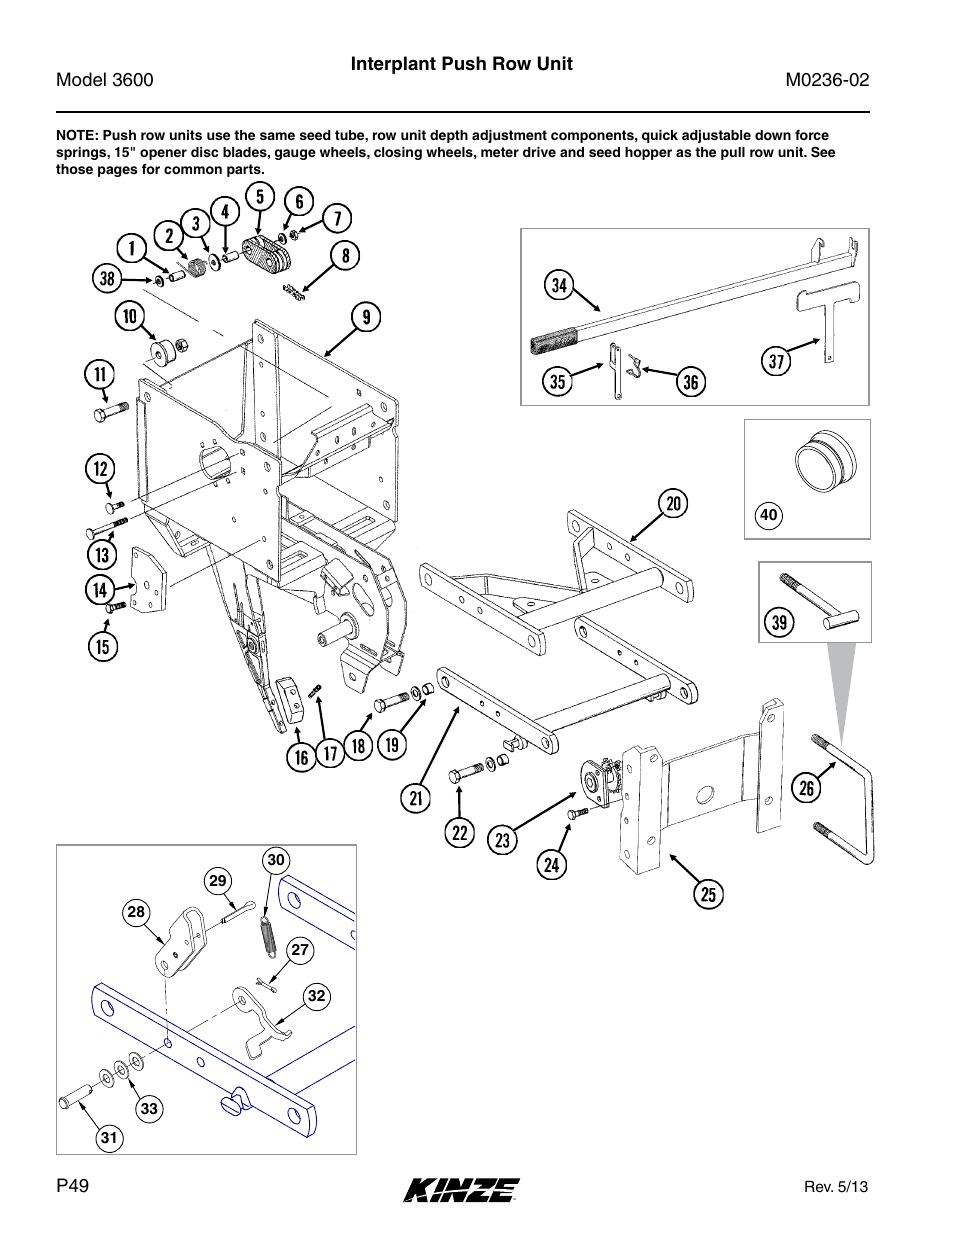 Interplant, Interplant push row unit | Kinze 3600 Lift and Rotate Planter Rev. 5/14 User Manual | Page 52 / 302